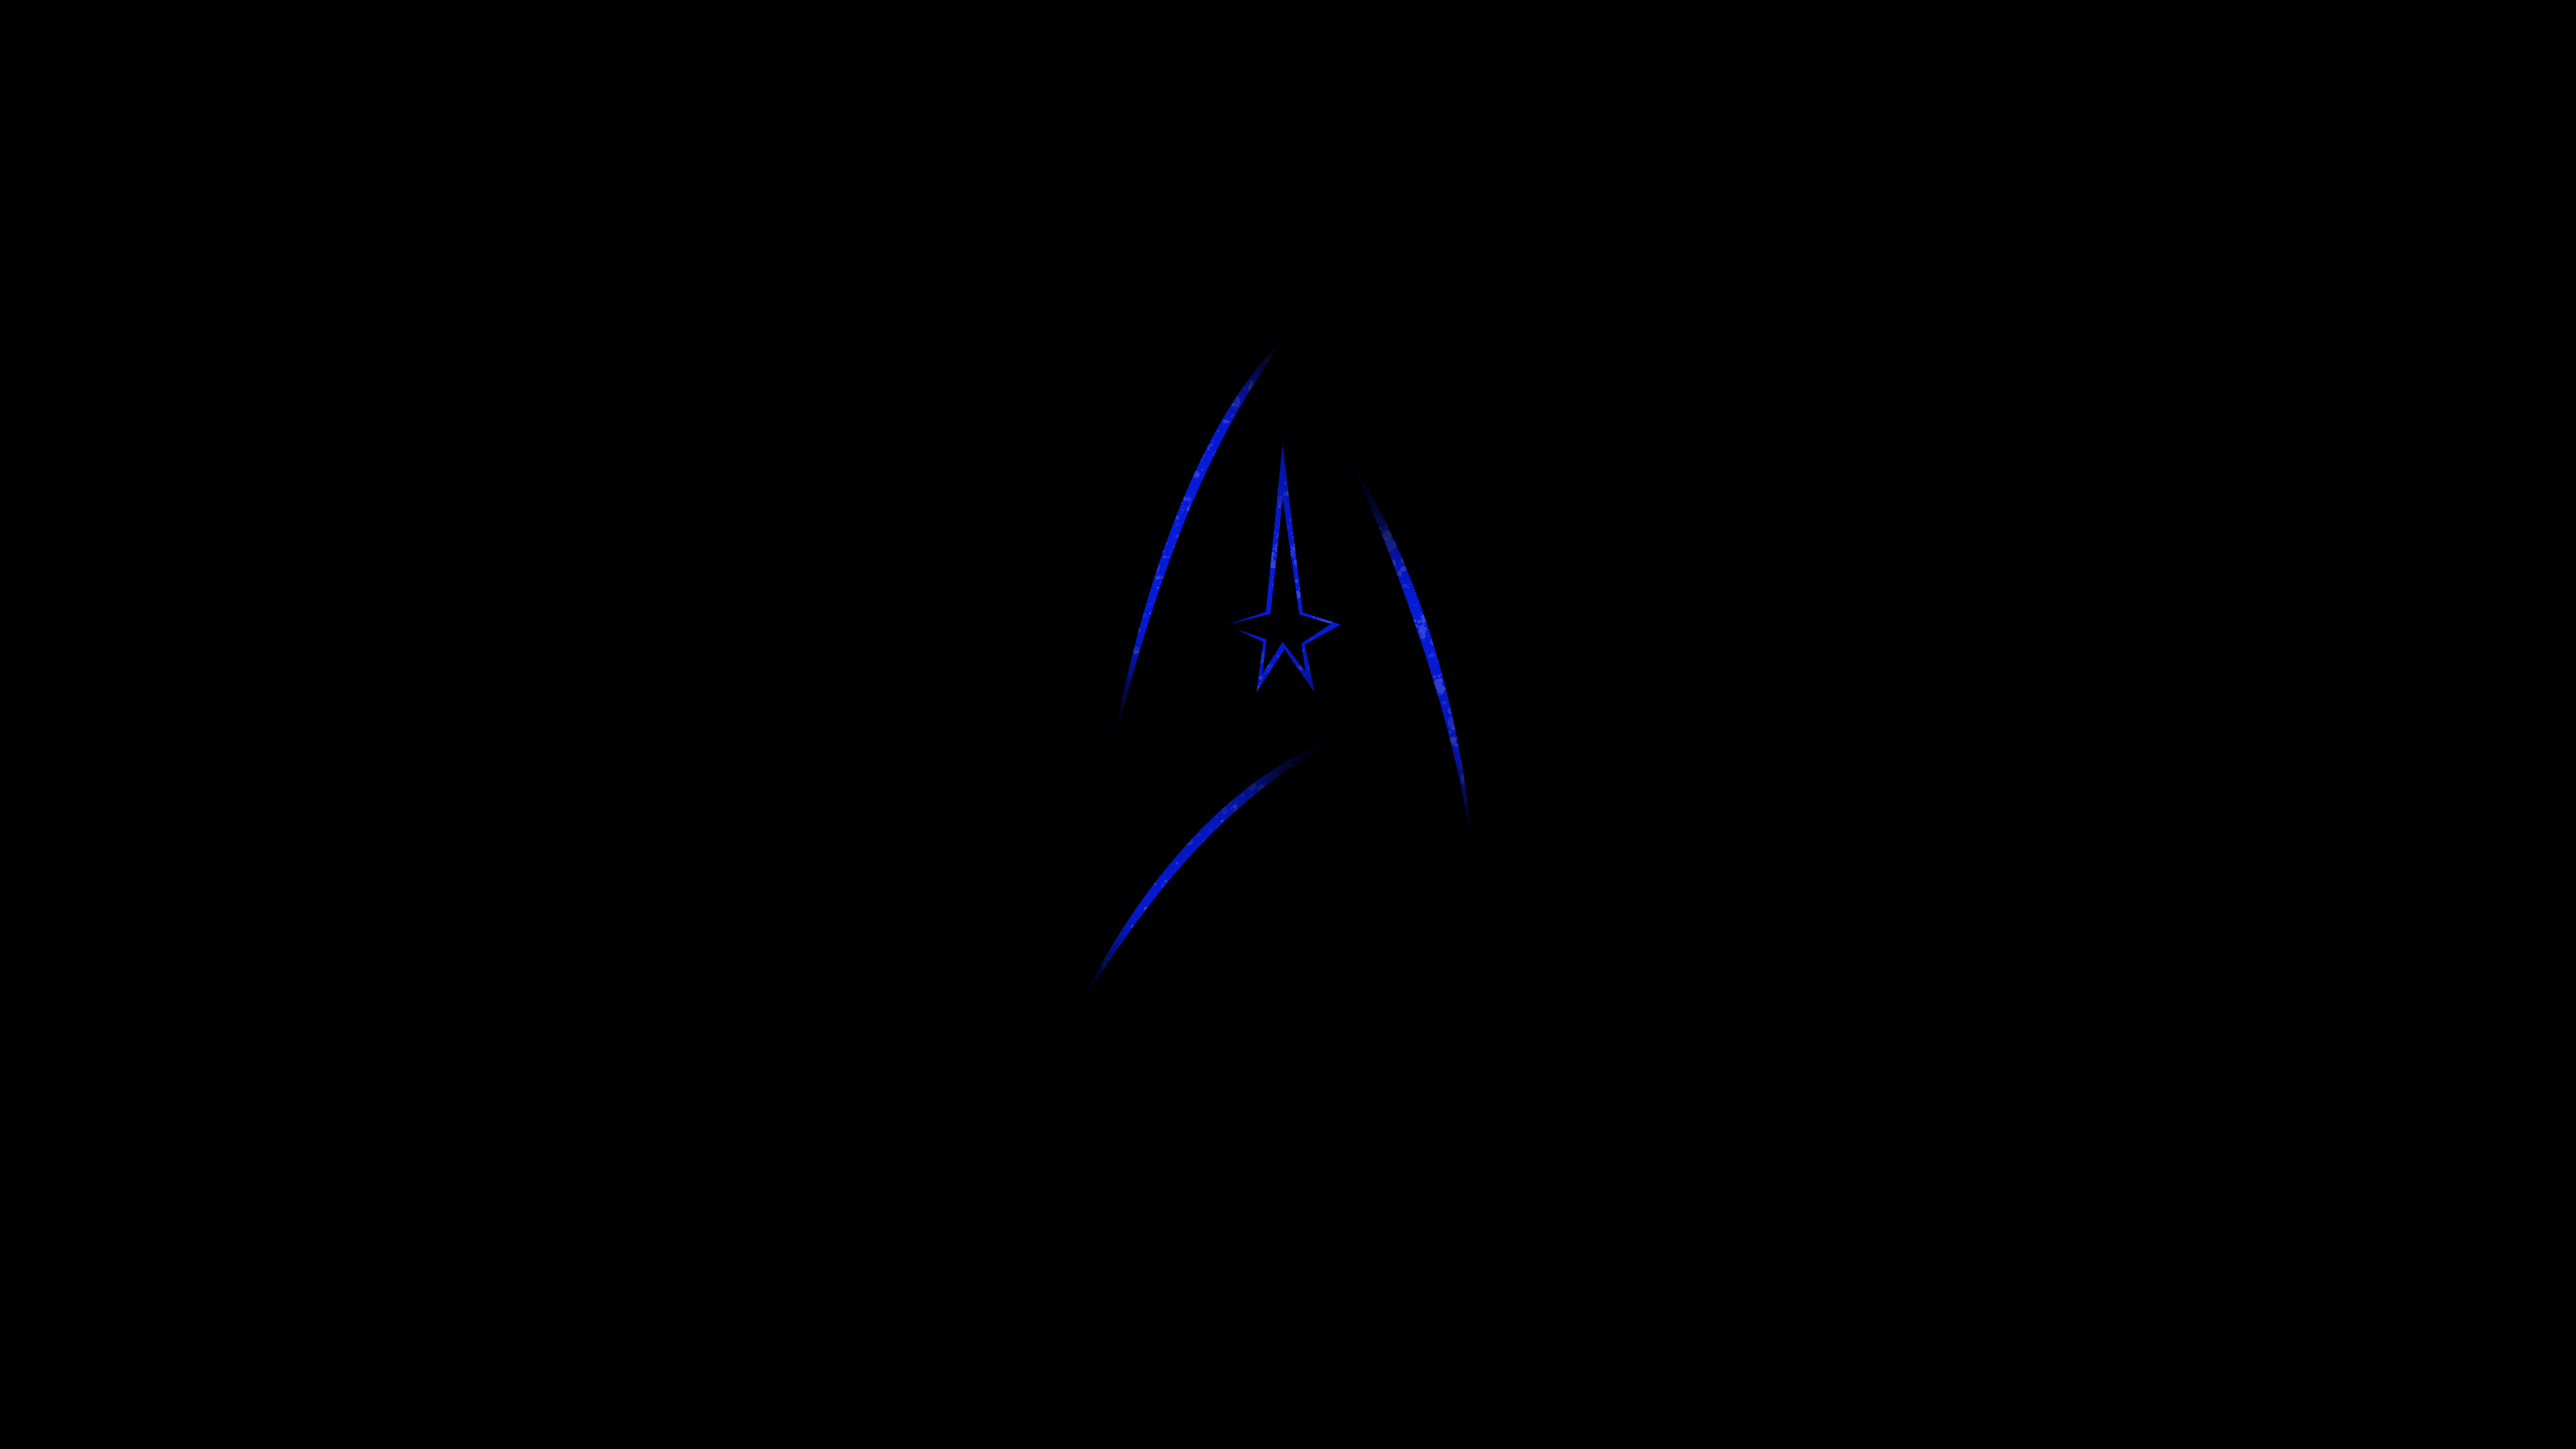 Star Trek Fictional Science Fiction Logo Minimalism TV Series Movies Simple Background Black Backgro 3840x2160